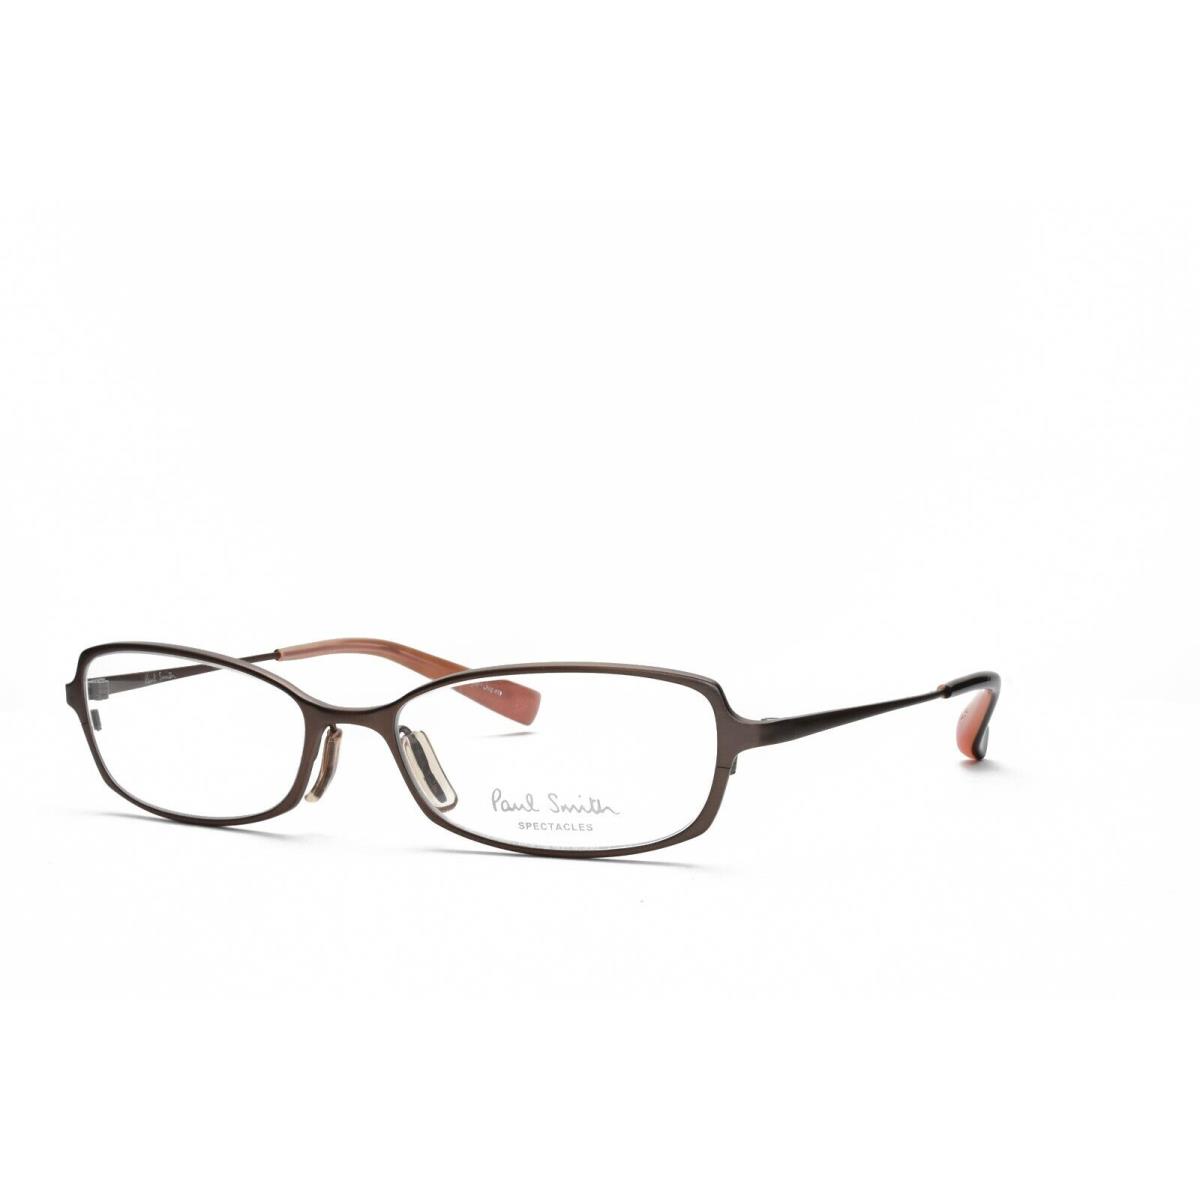 Paul Smith PS 188 MC Eyeglasses Frames Only 51-16-130